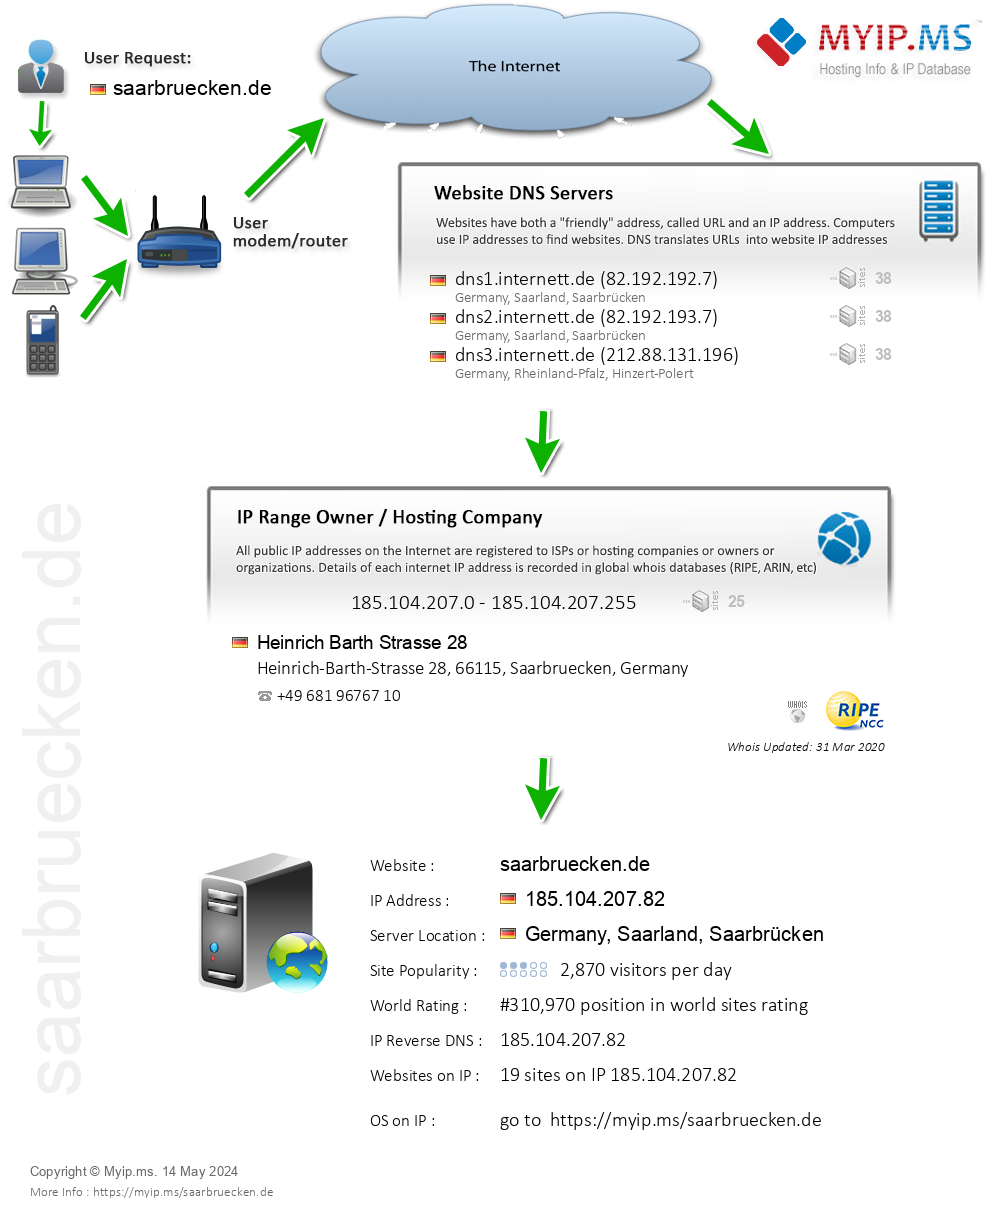 Saarbruecken.de - Website Hosting Visual IP Diagram